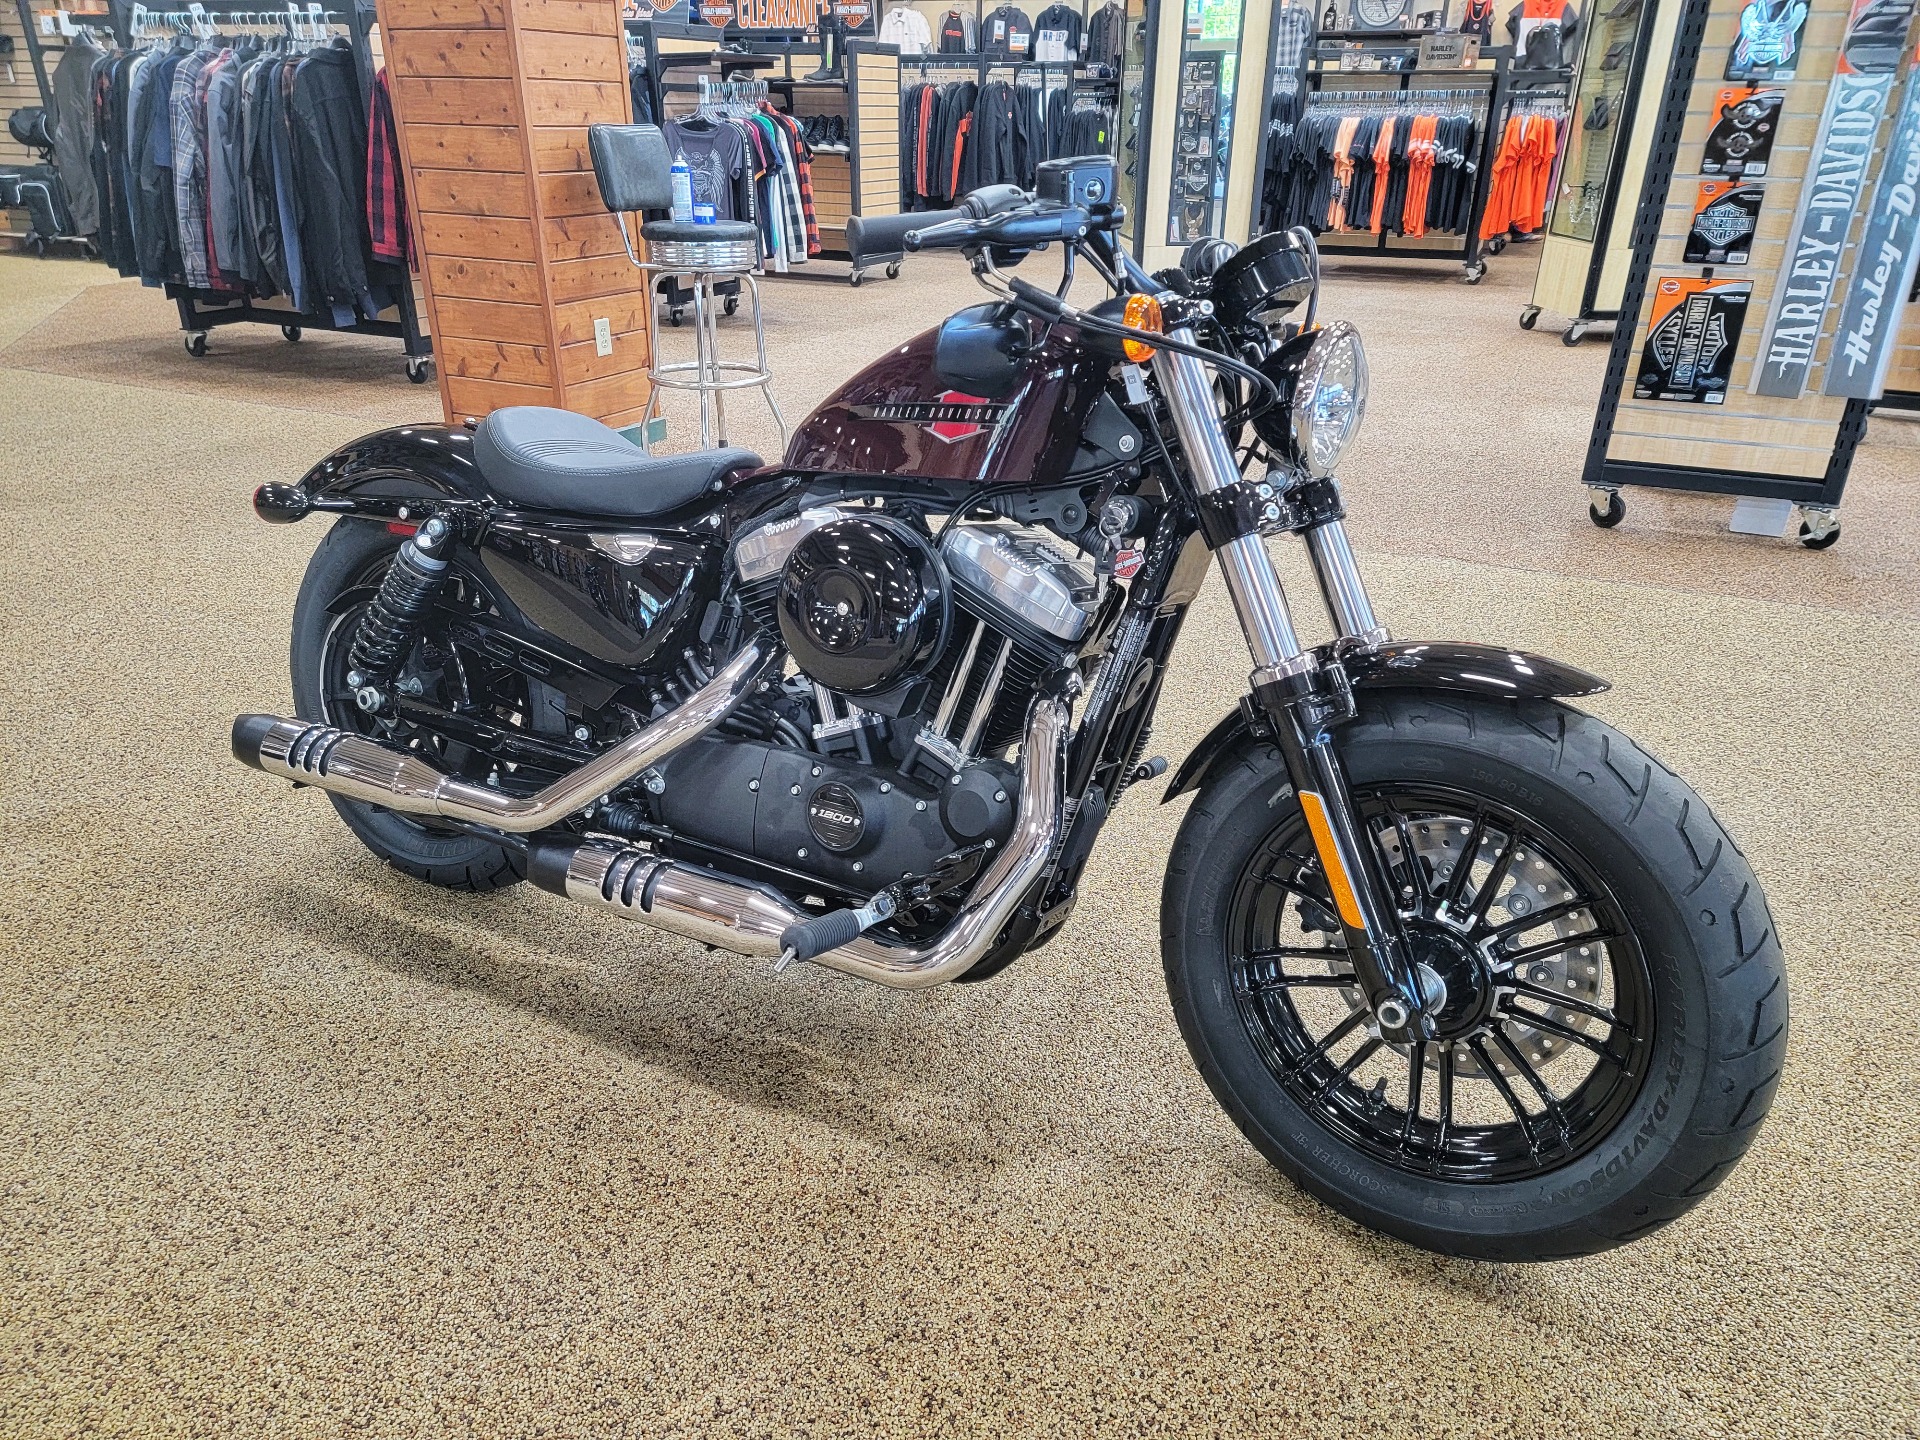 New 2021 Harley Davidson Forty Eight Midnight Crimson Motorcycles In Sauk Rapids Mn Xl406688